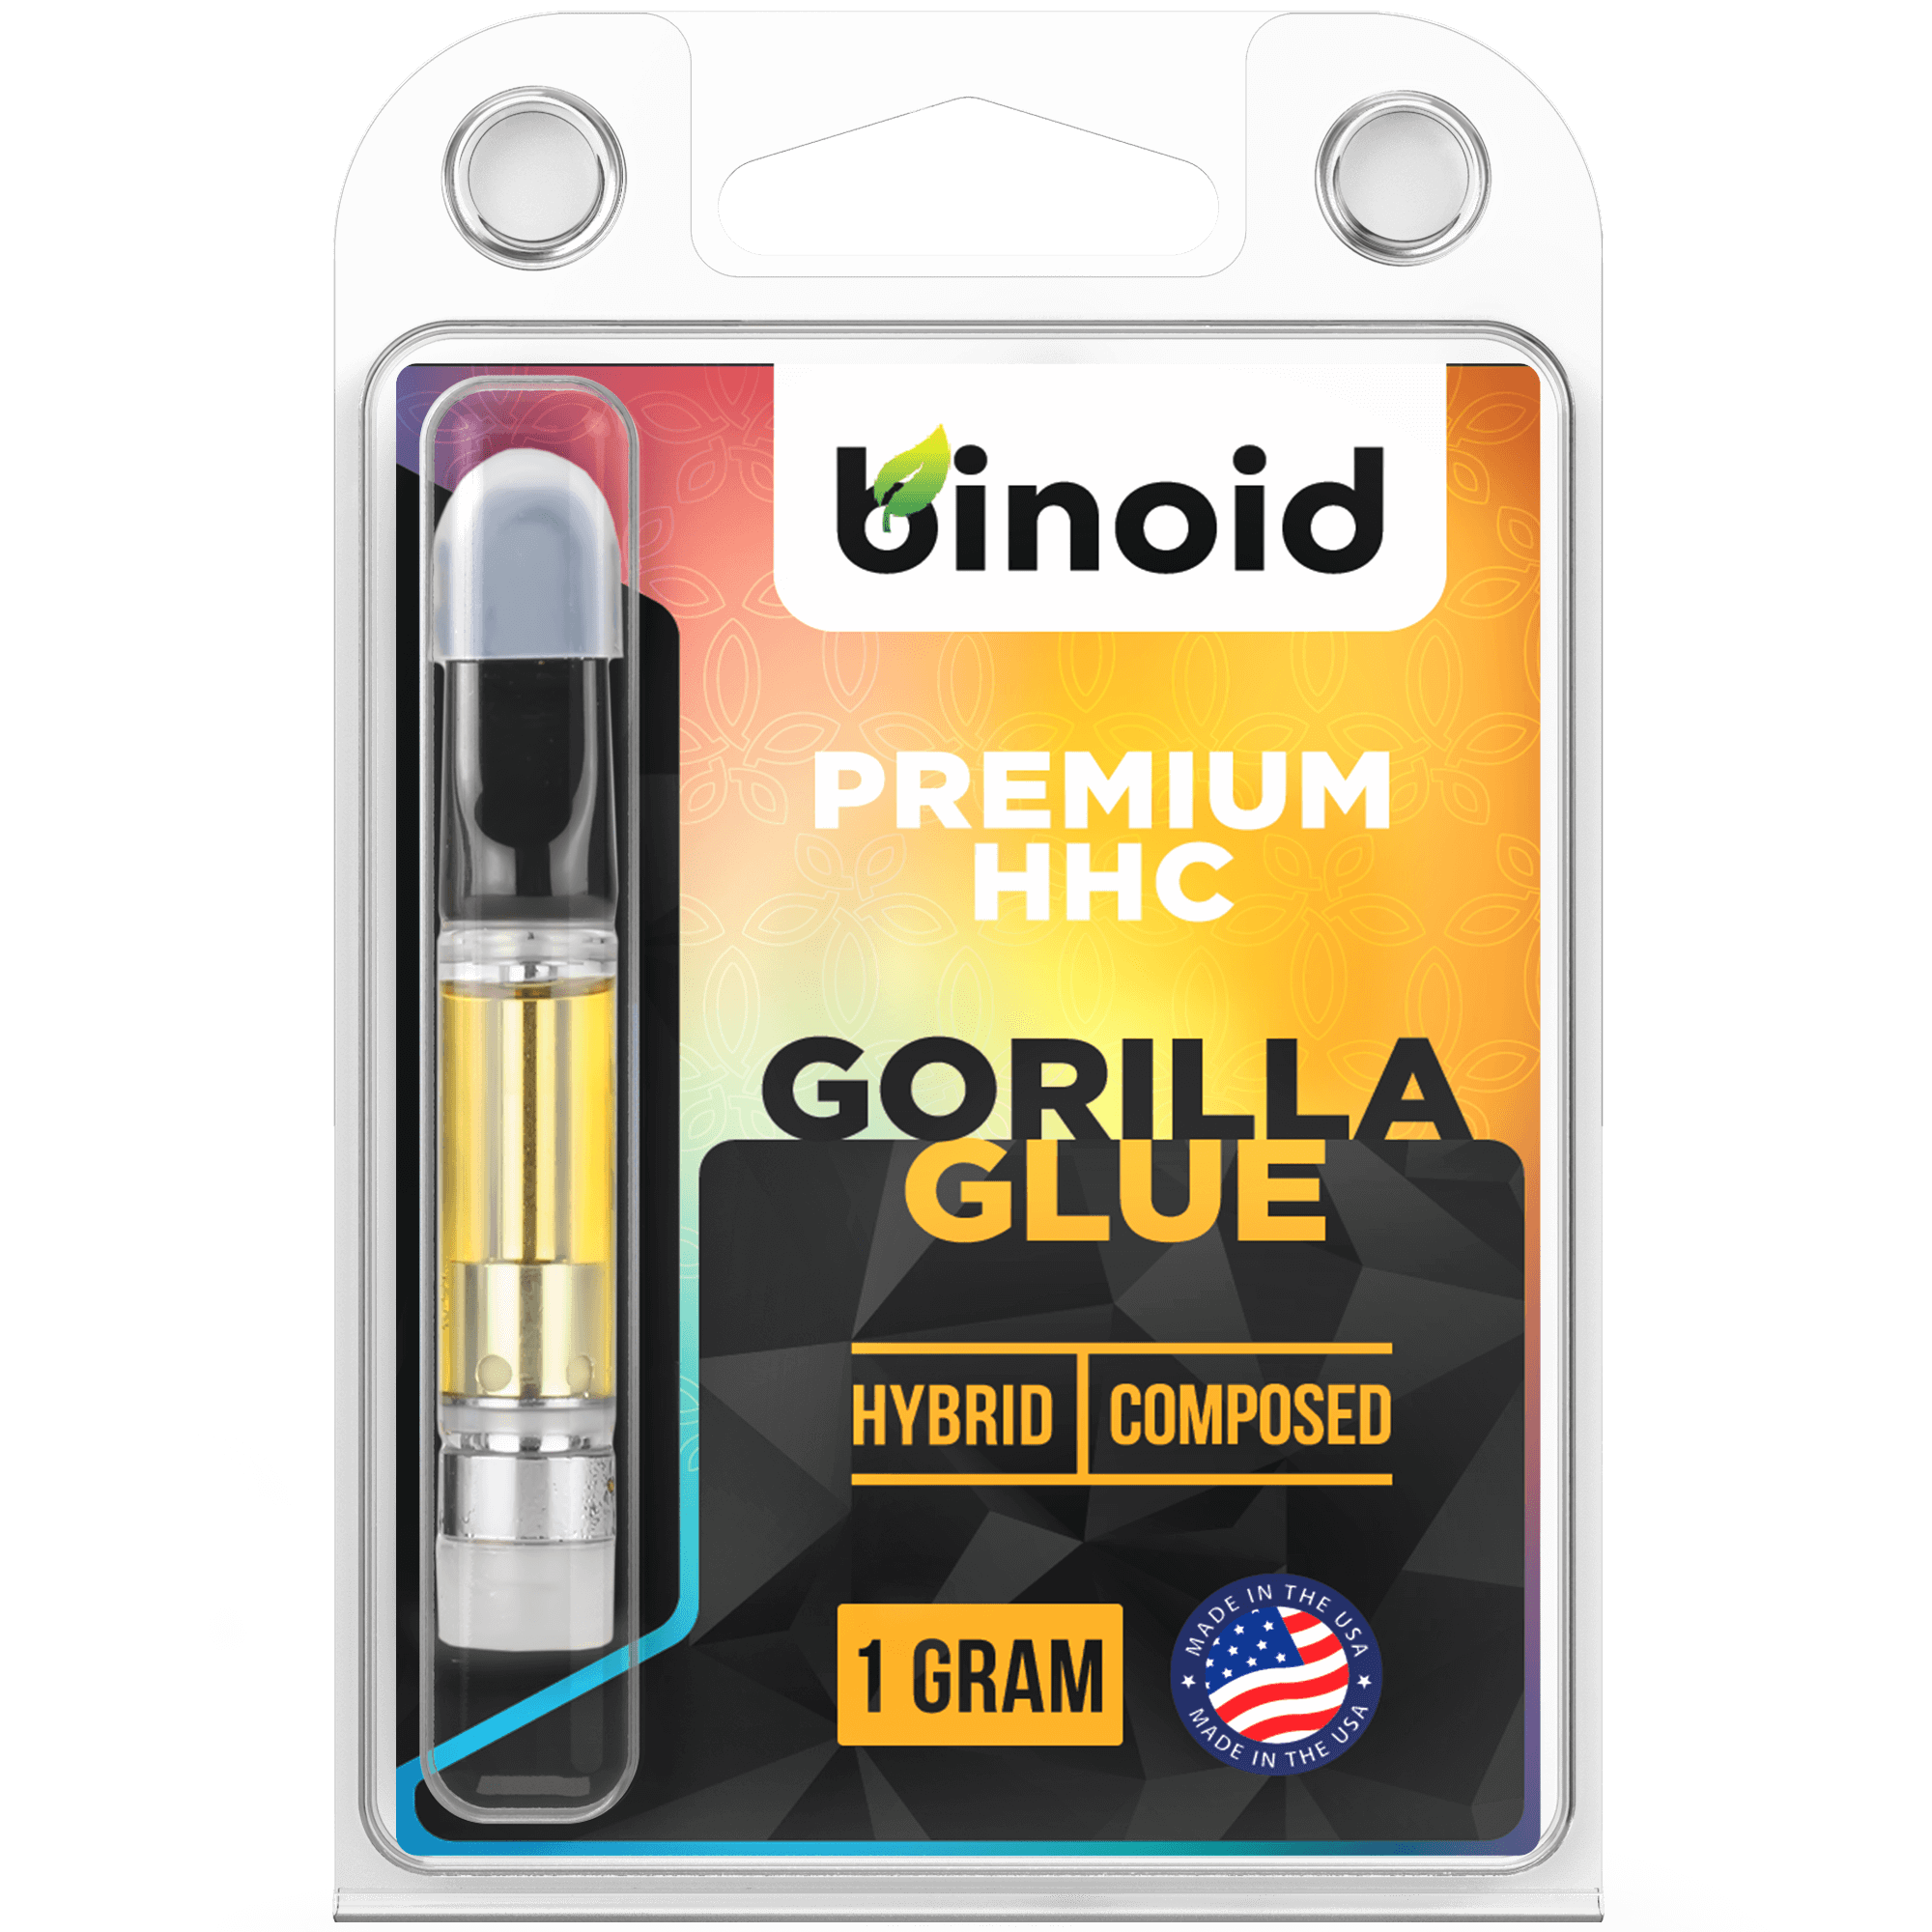 HHC Vape Cartridge For Sale - Gorilla Glue